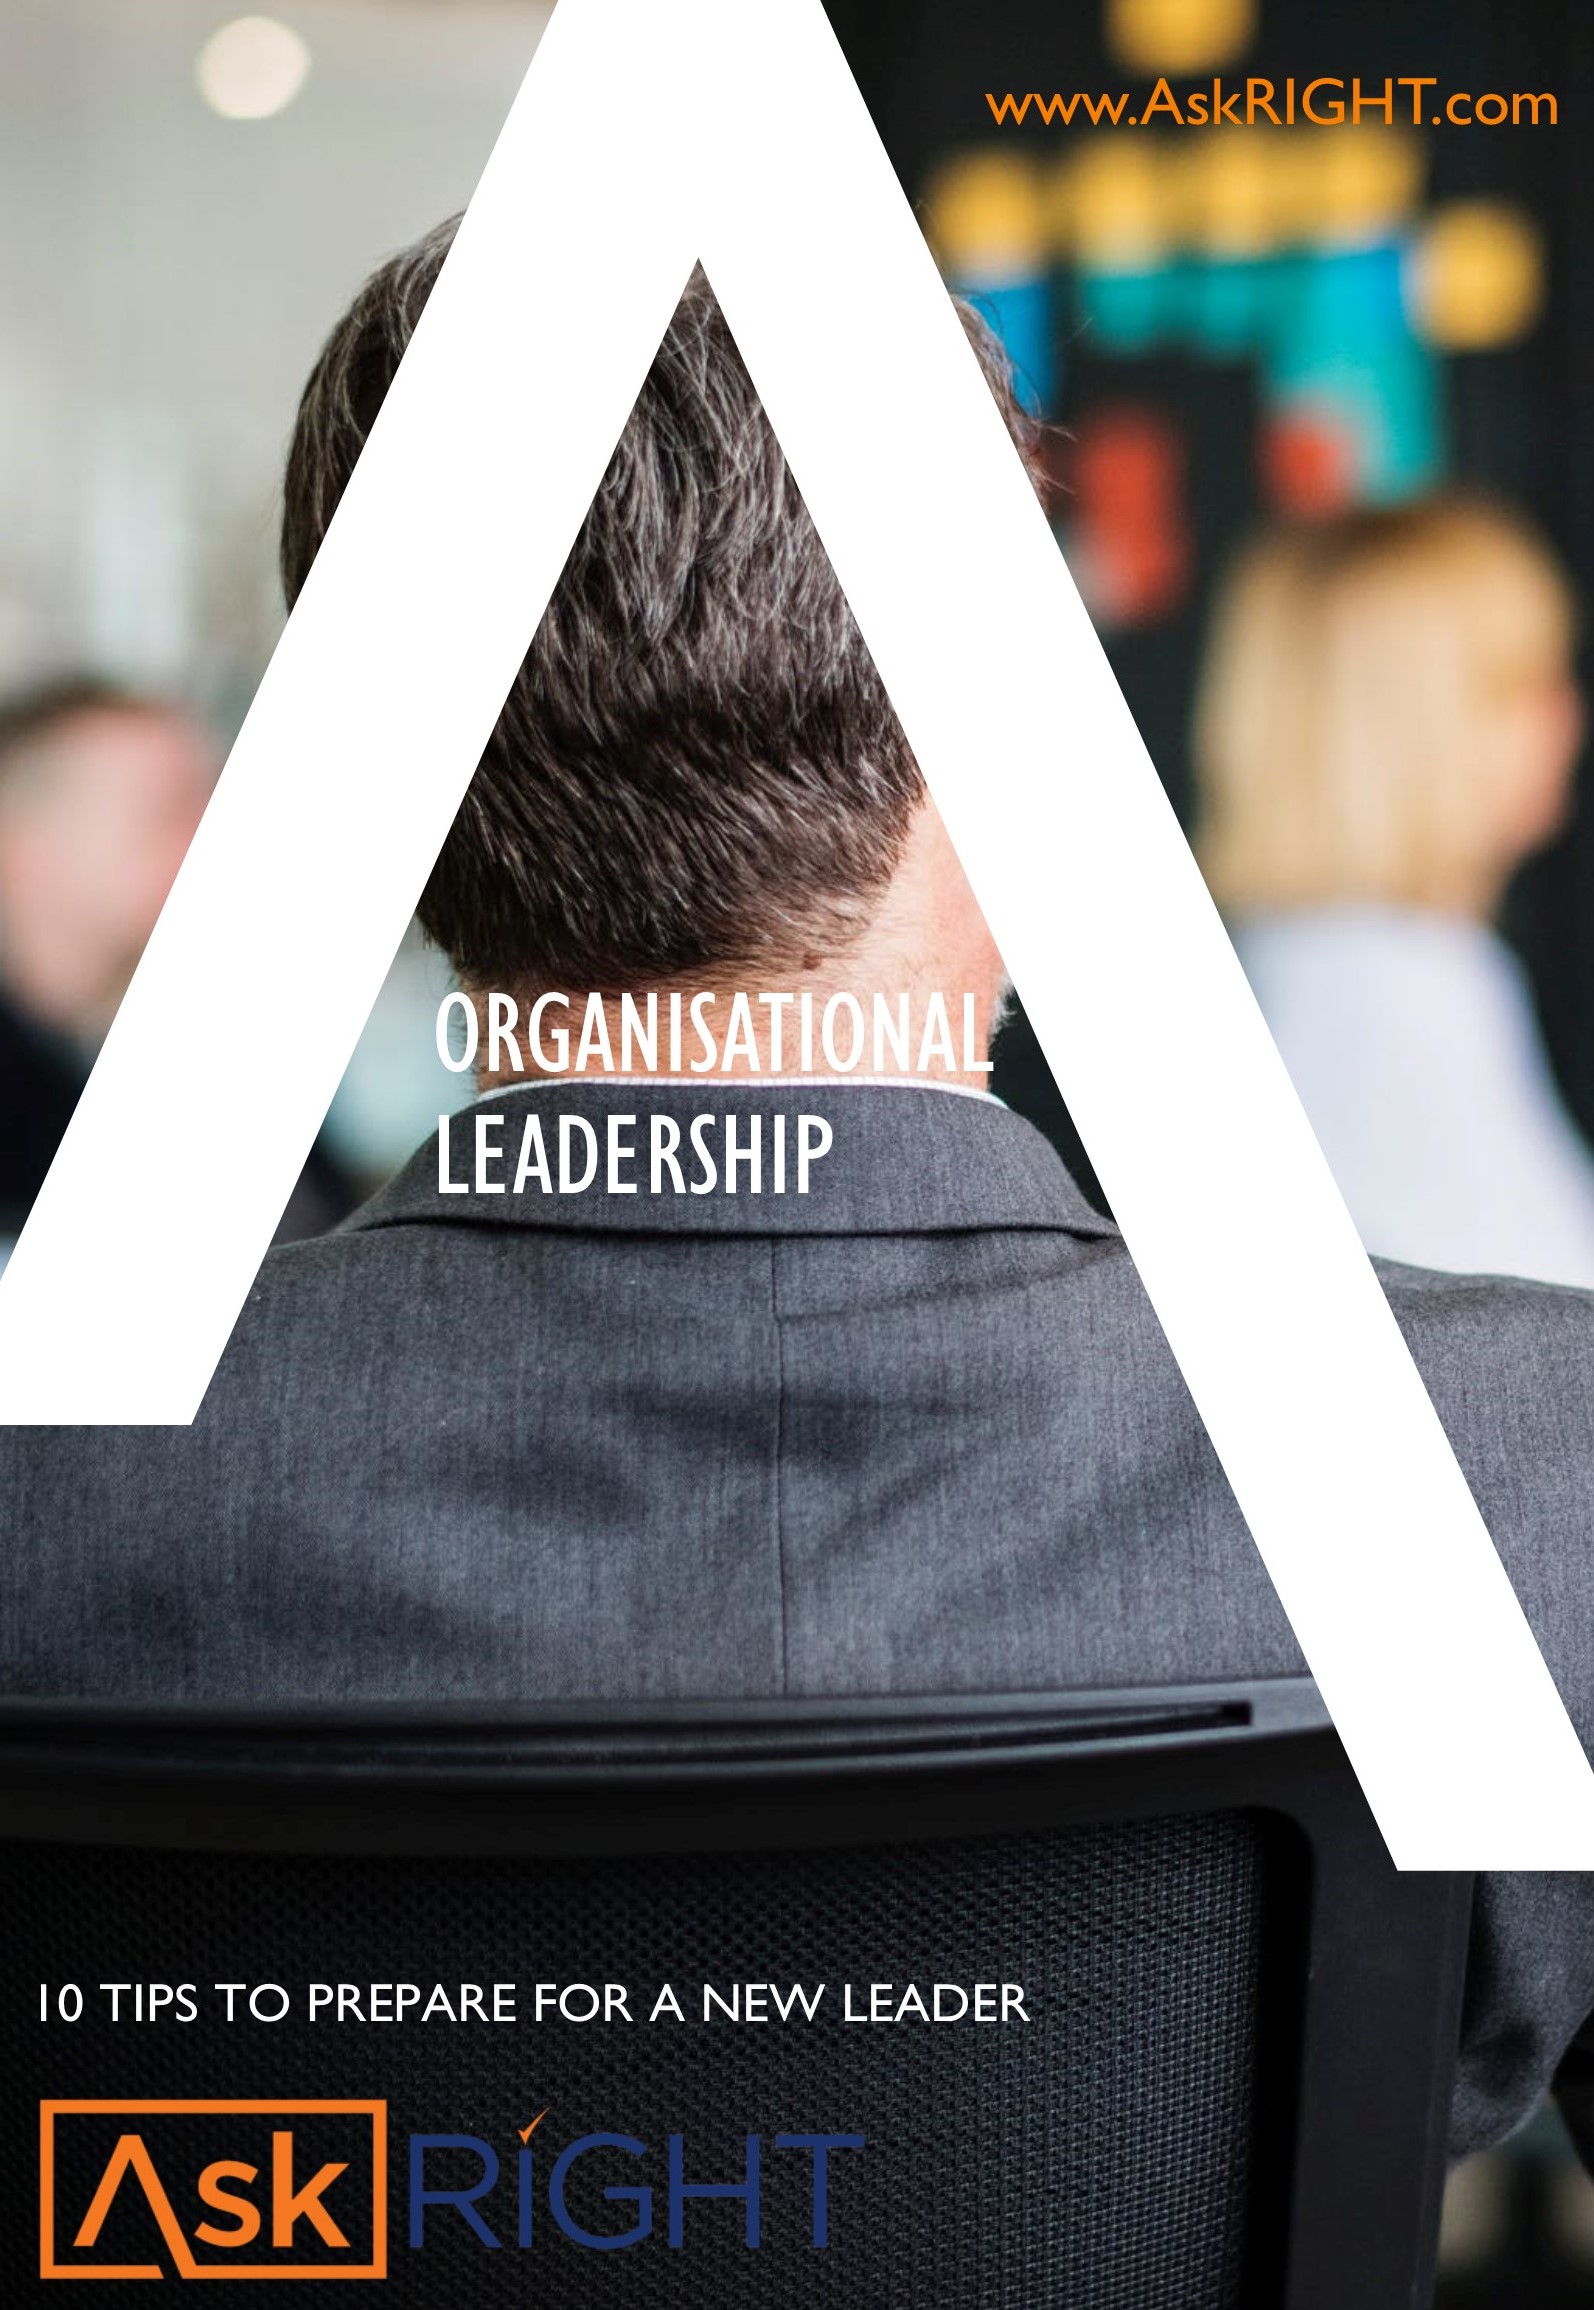 Organisational Leadership